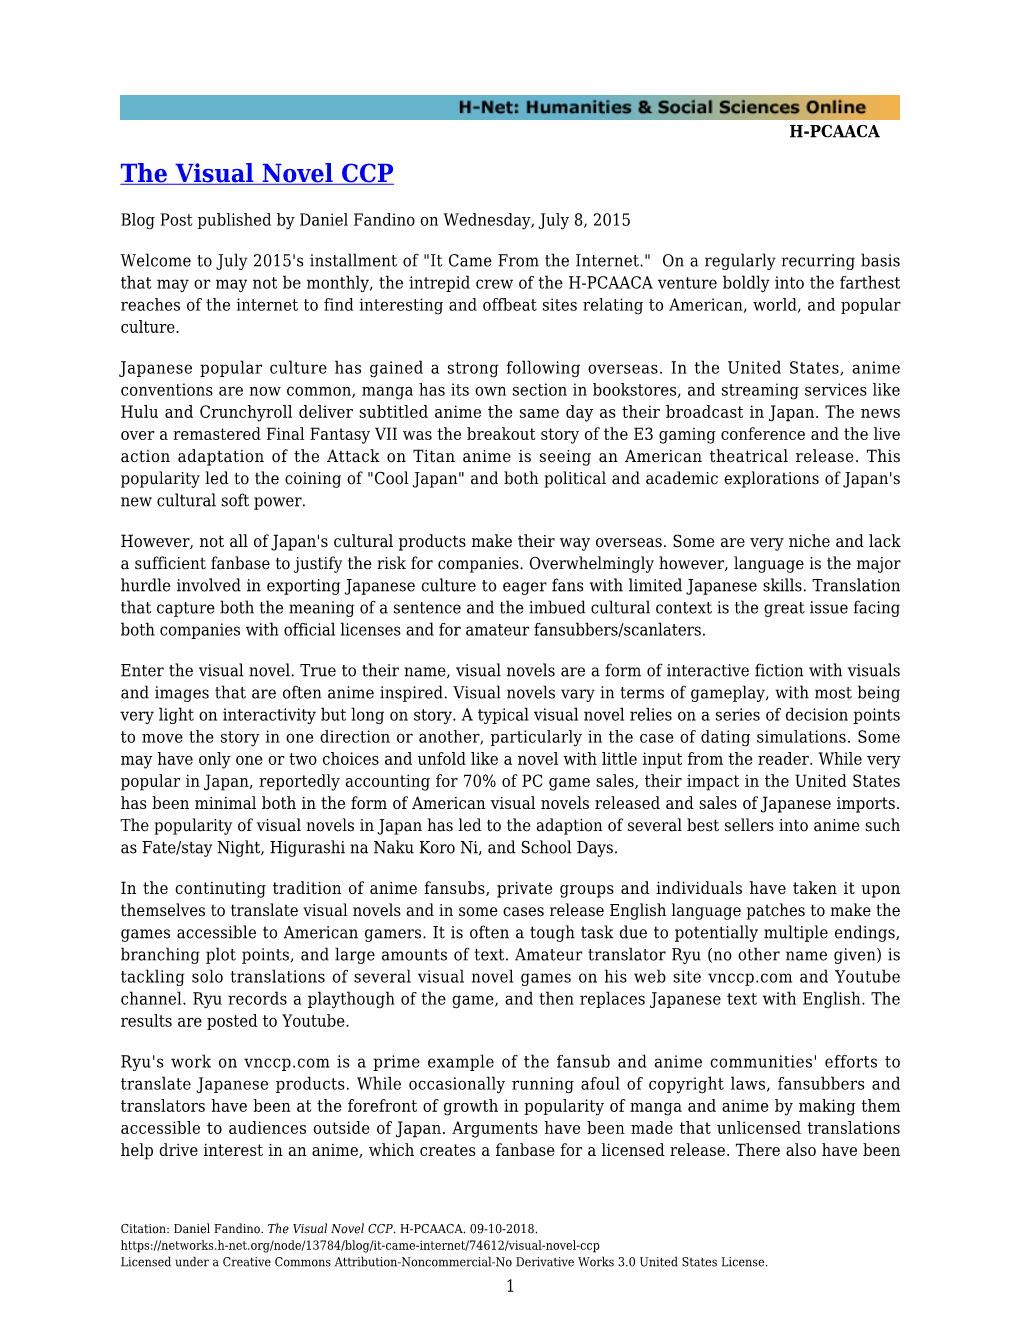 The Visual Novel CCP